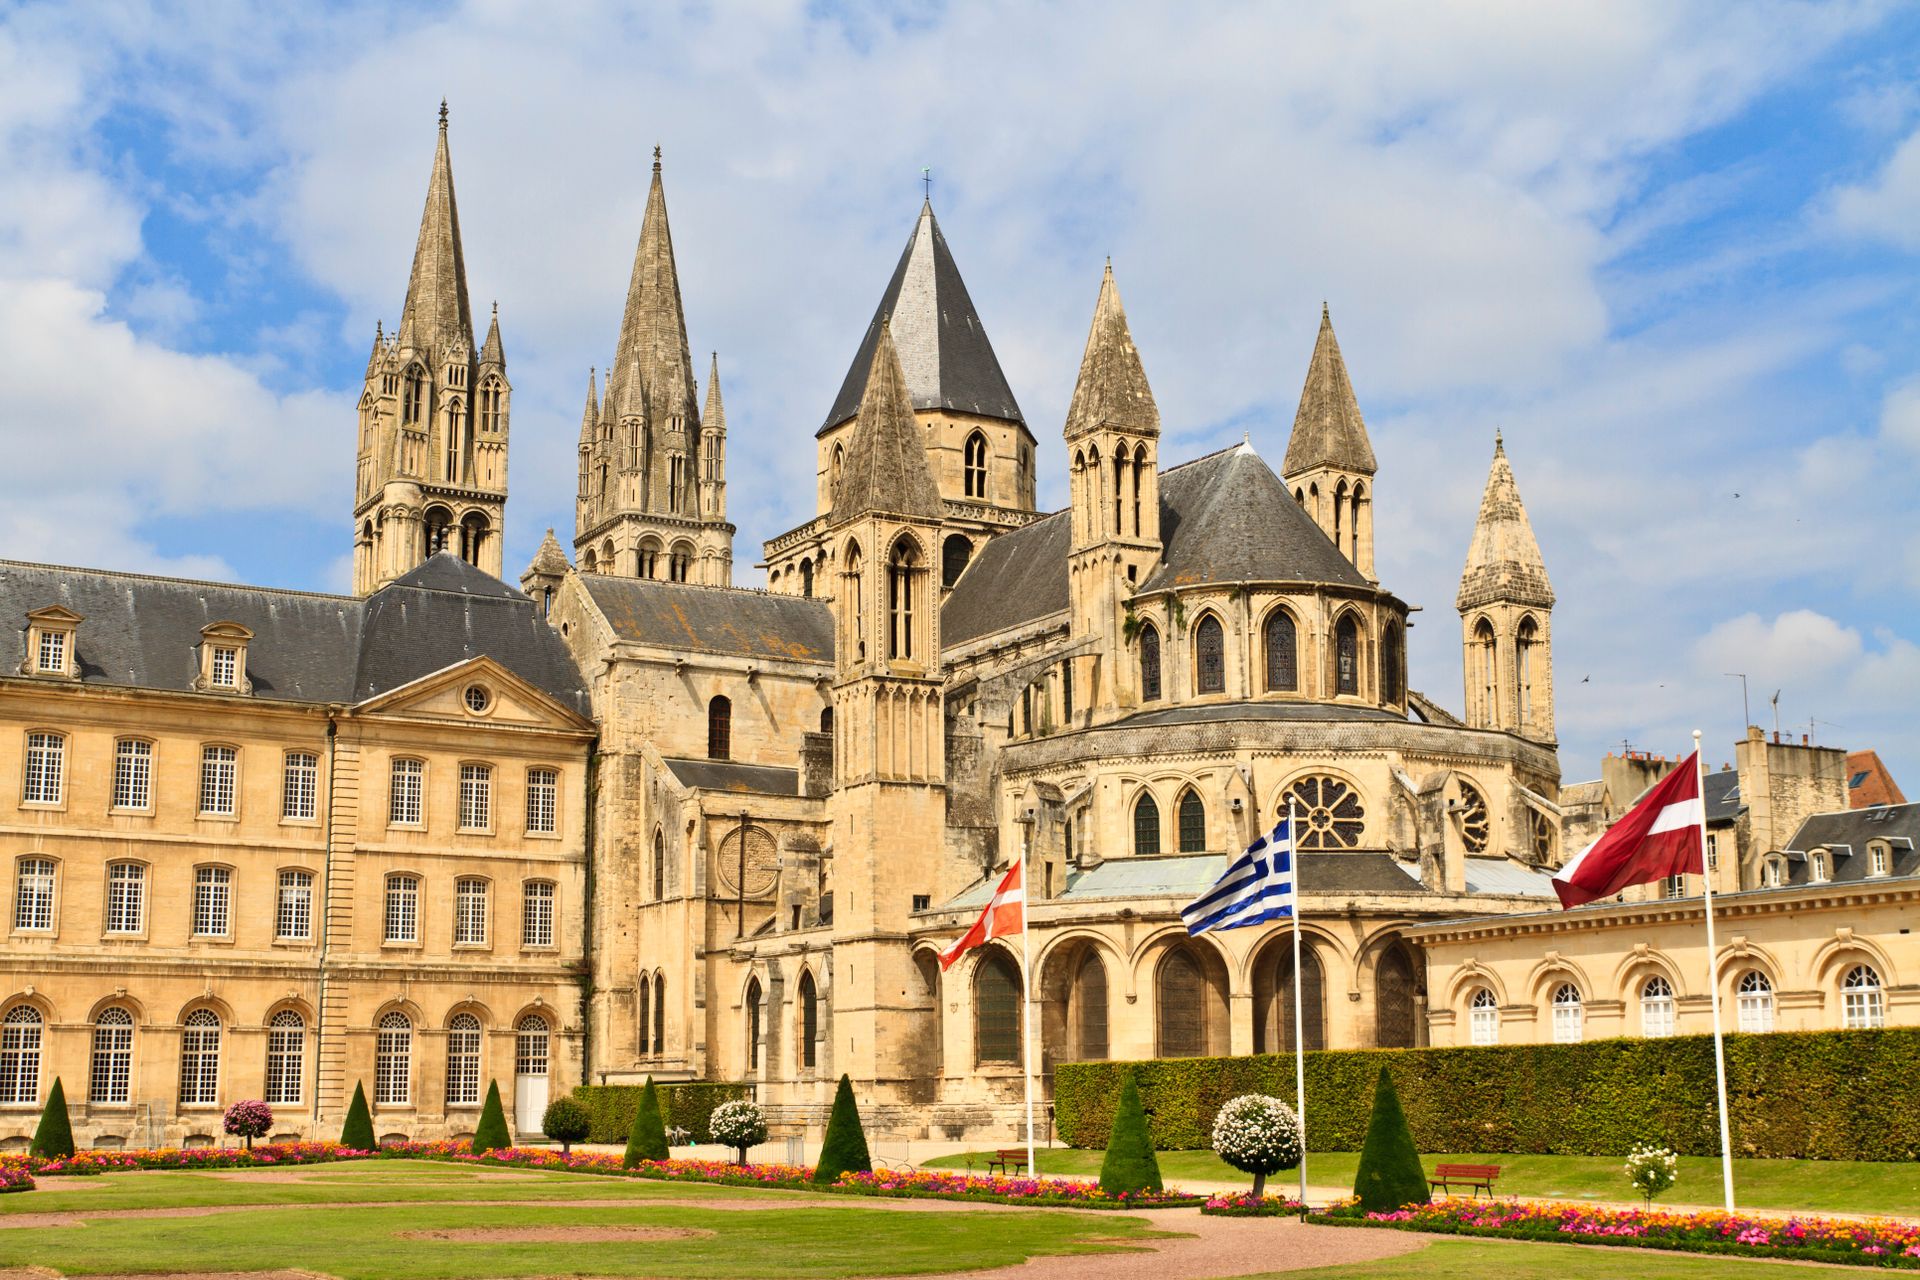  Abbaye Saint-Étienne (ou abbaye aux hommes), Caen, Normandie - France ©Thinkstock